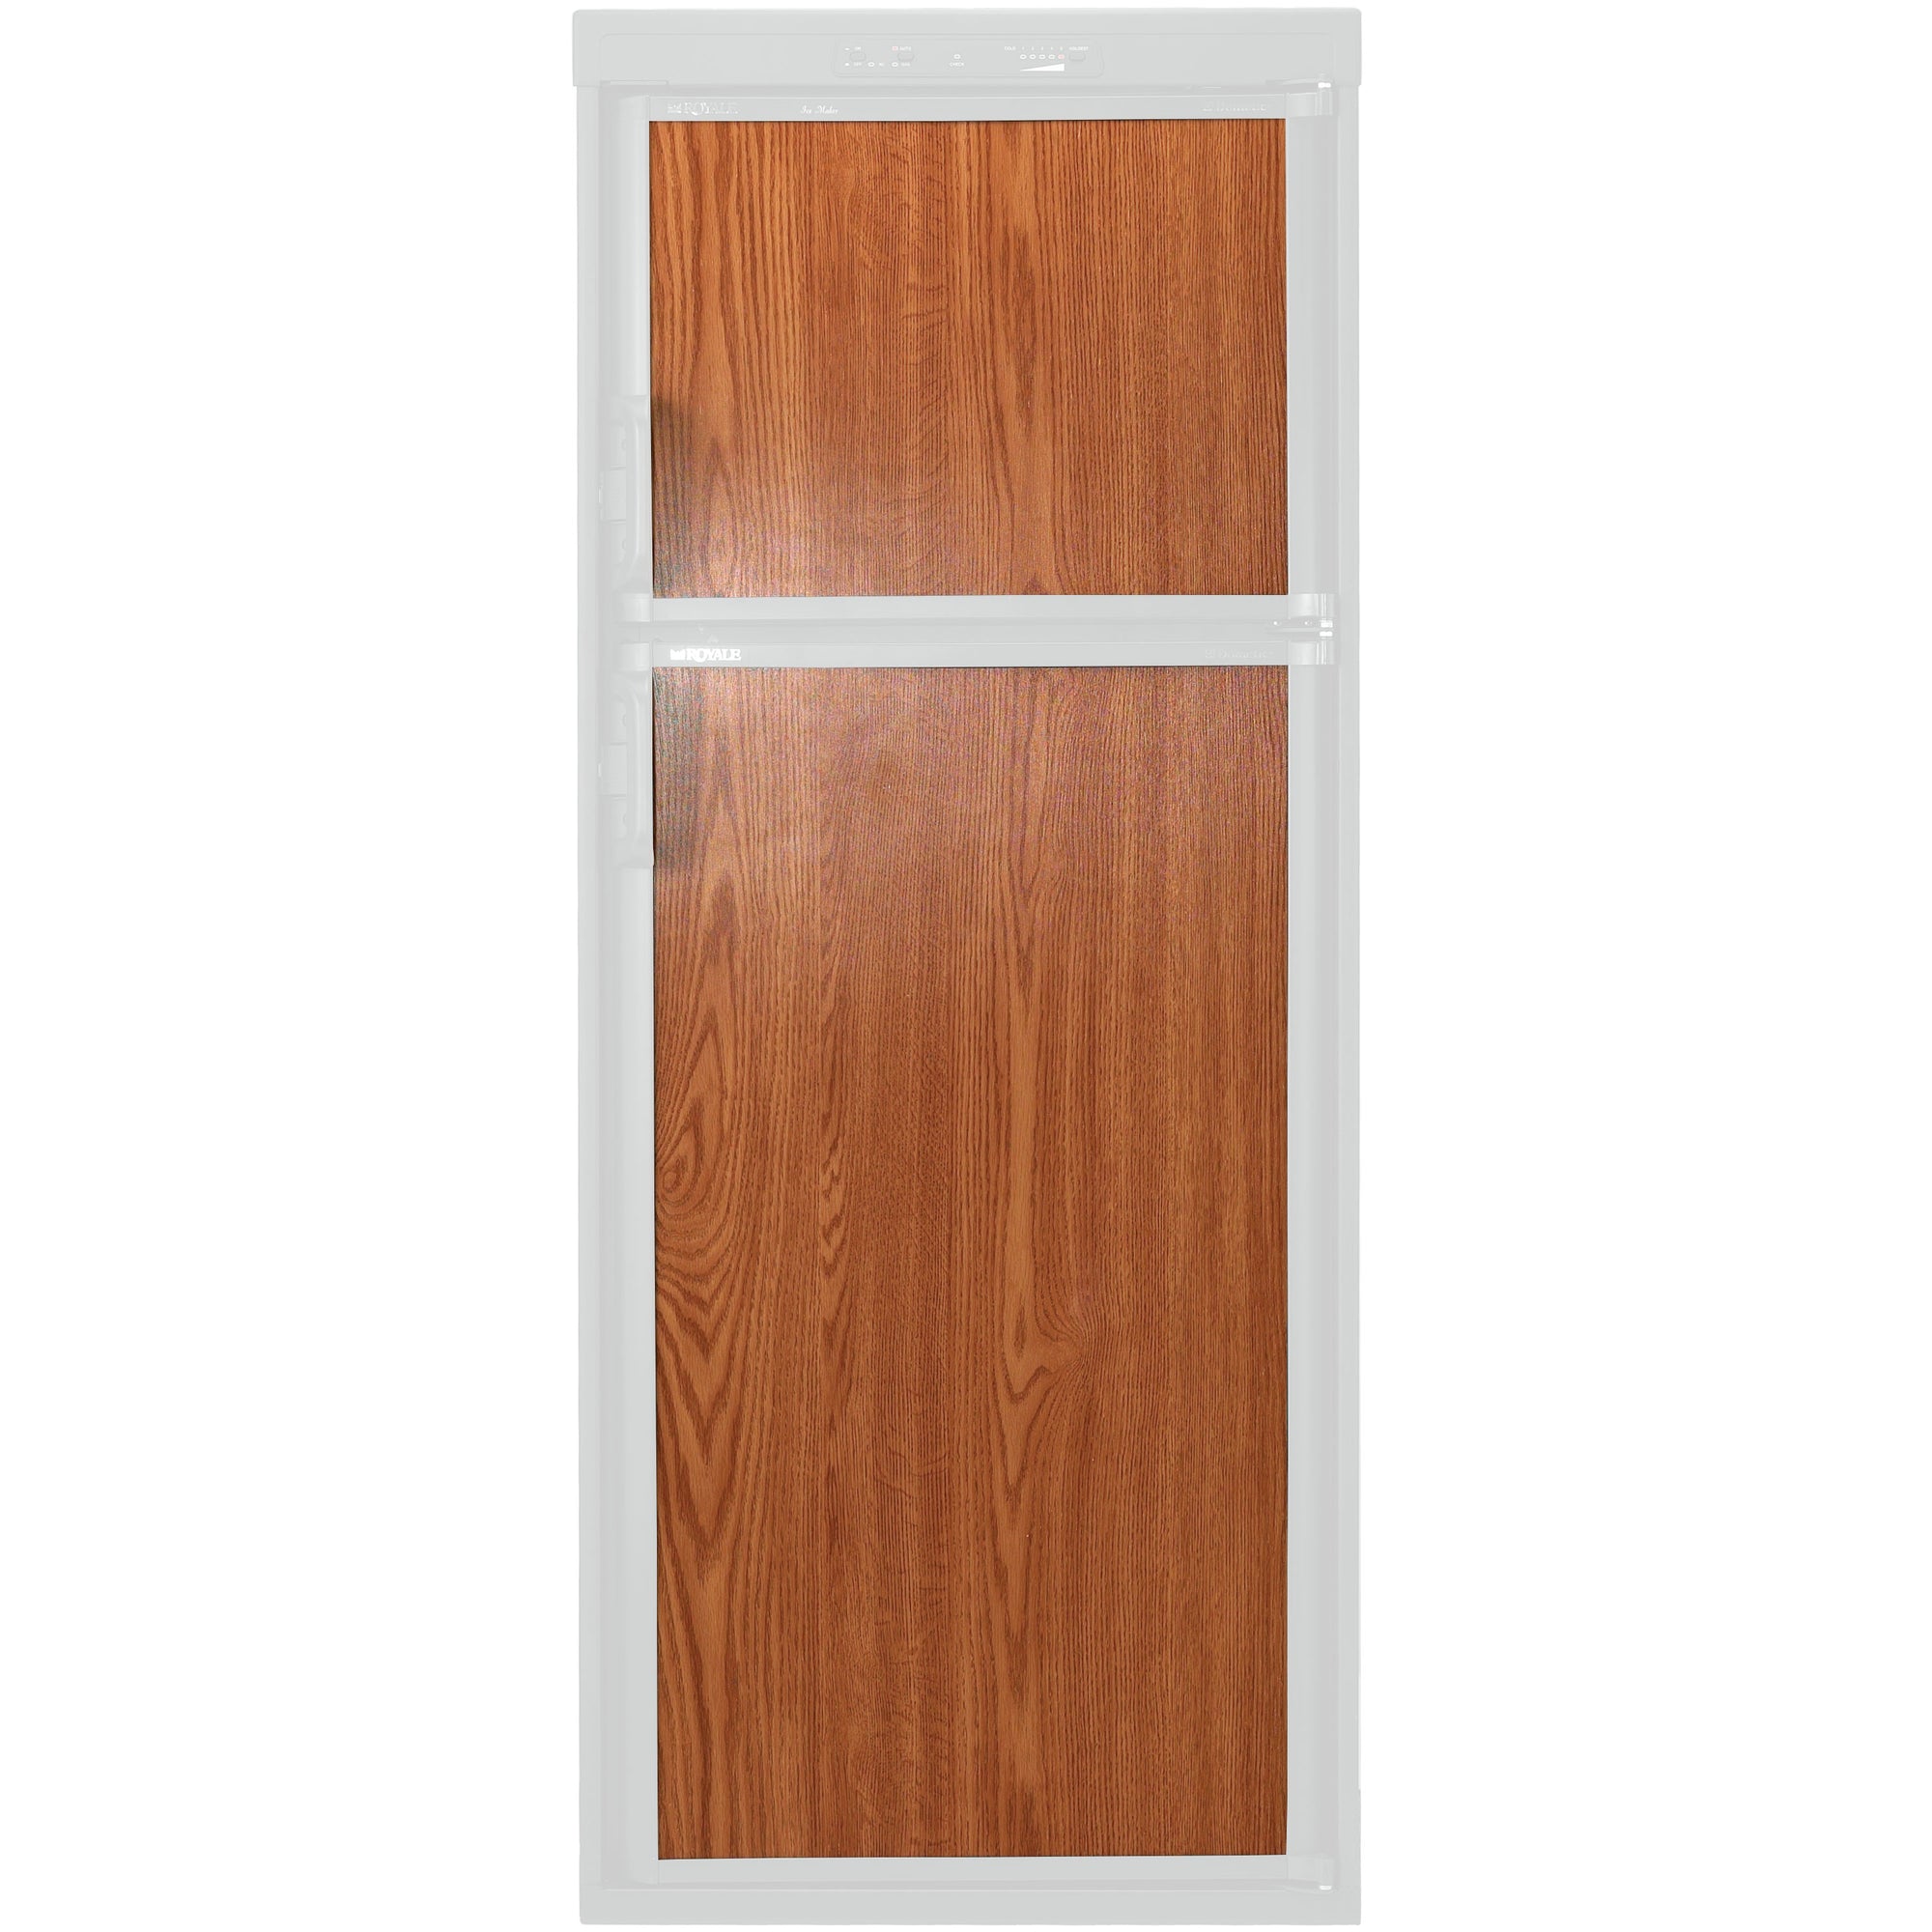 Dometic 3106863.131B Refrigerator Door Panel, Both Panels for 7732/7832 - Wood Grain